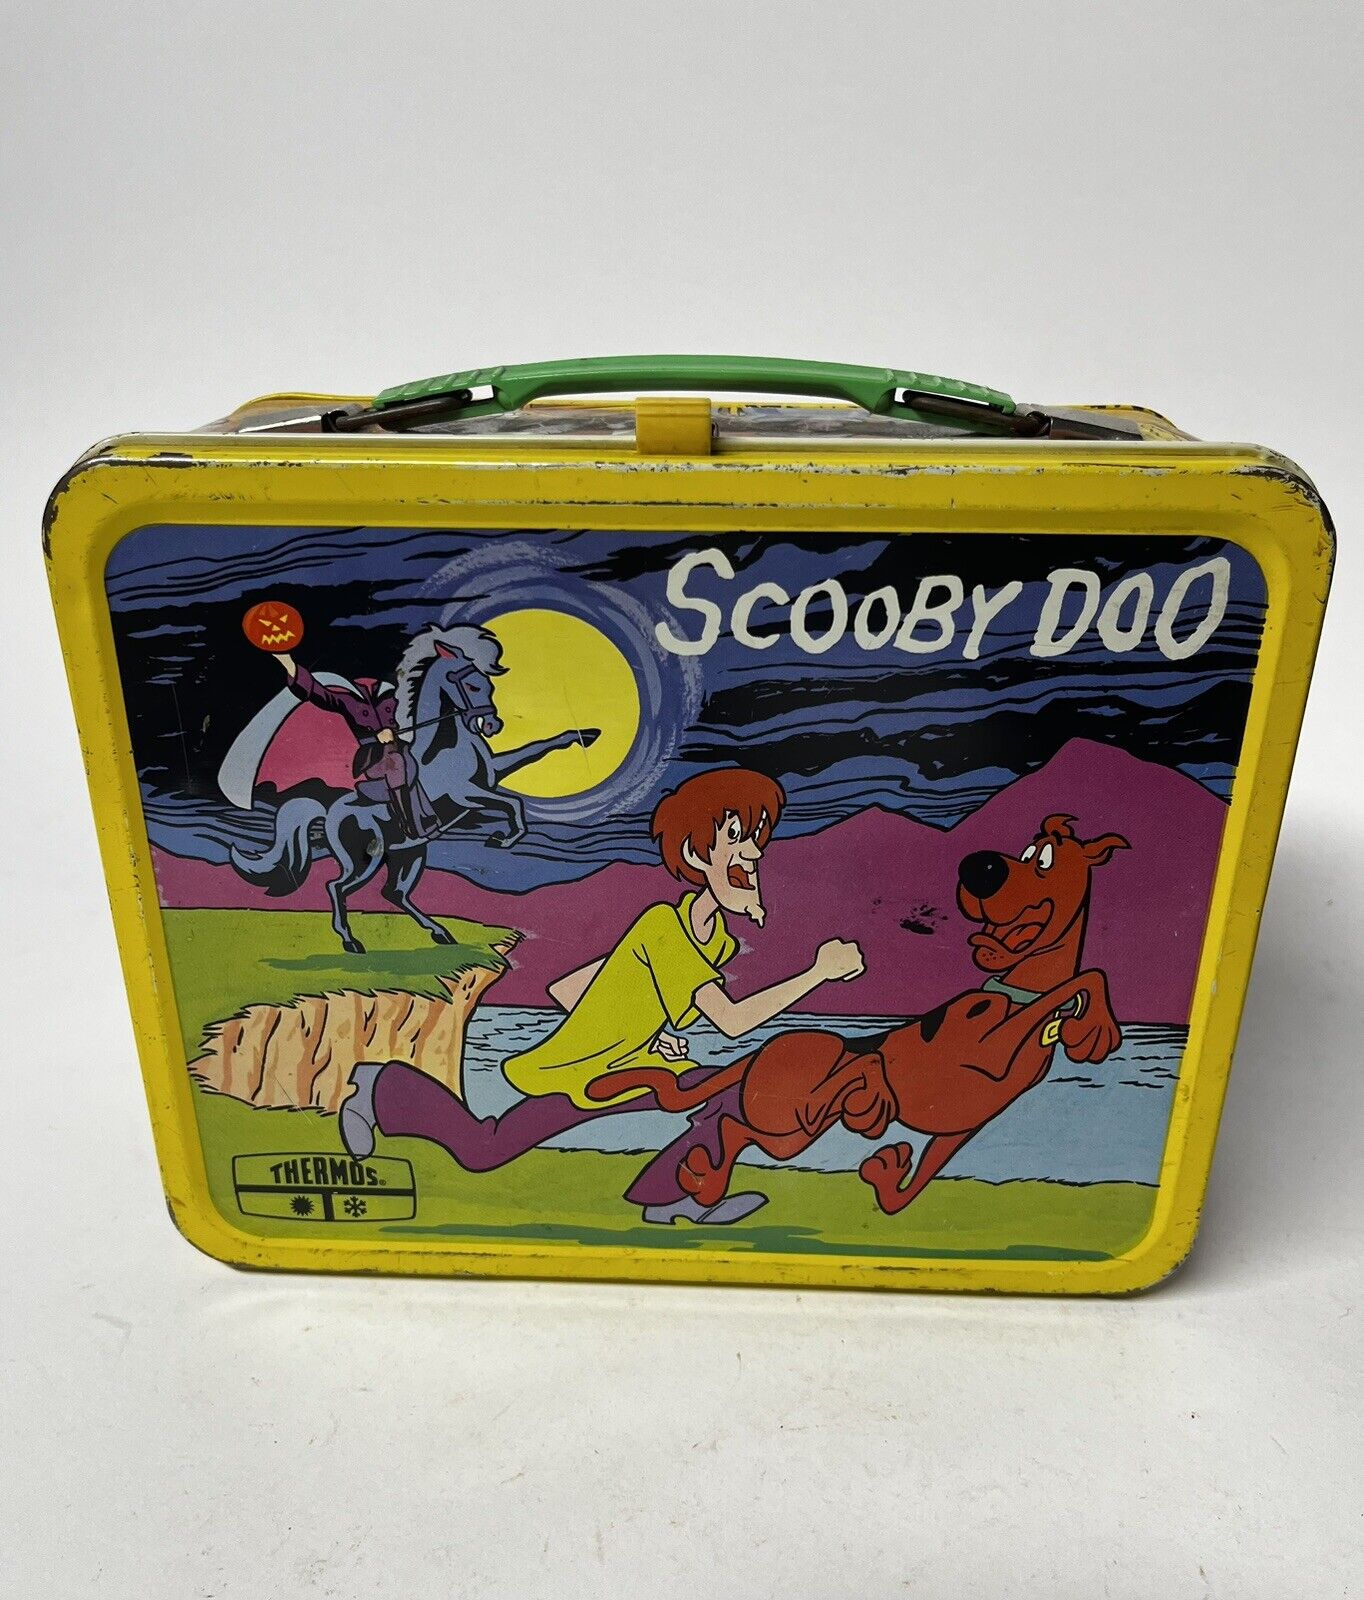 VINTAGE 1973 Scooby Doo METAL Lunchbox King-Seeley Hanna-Barbera